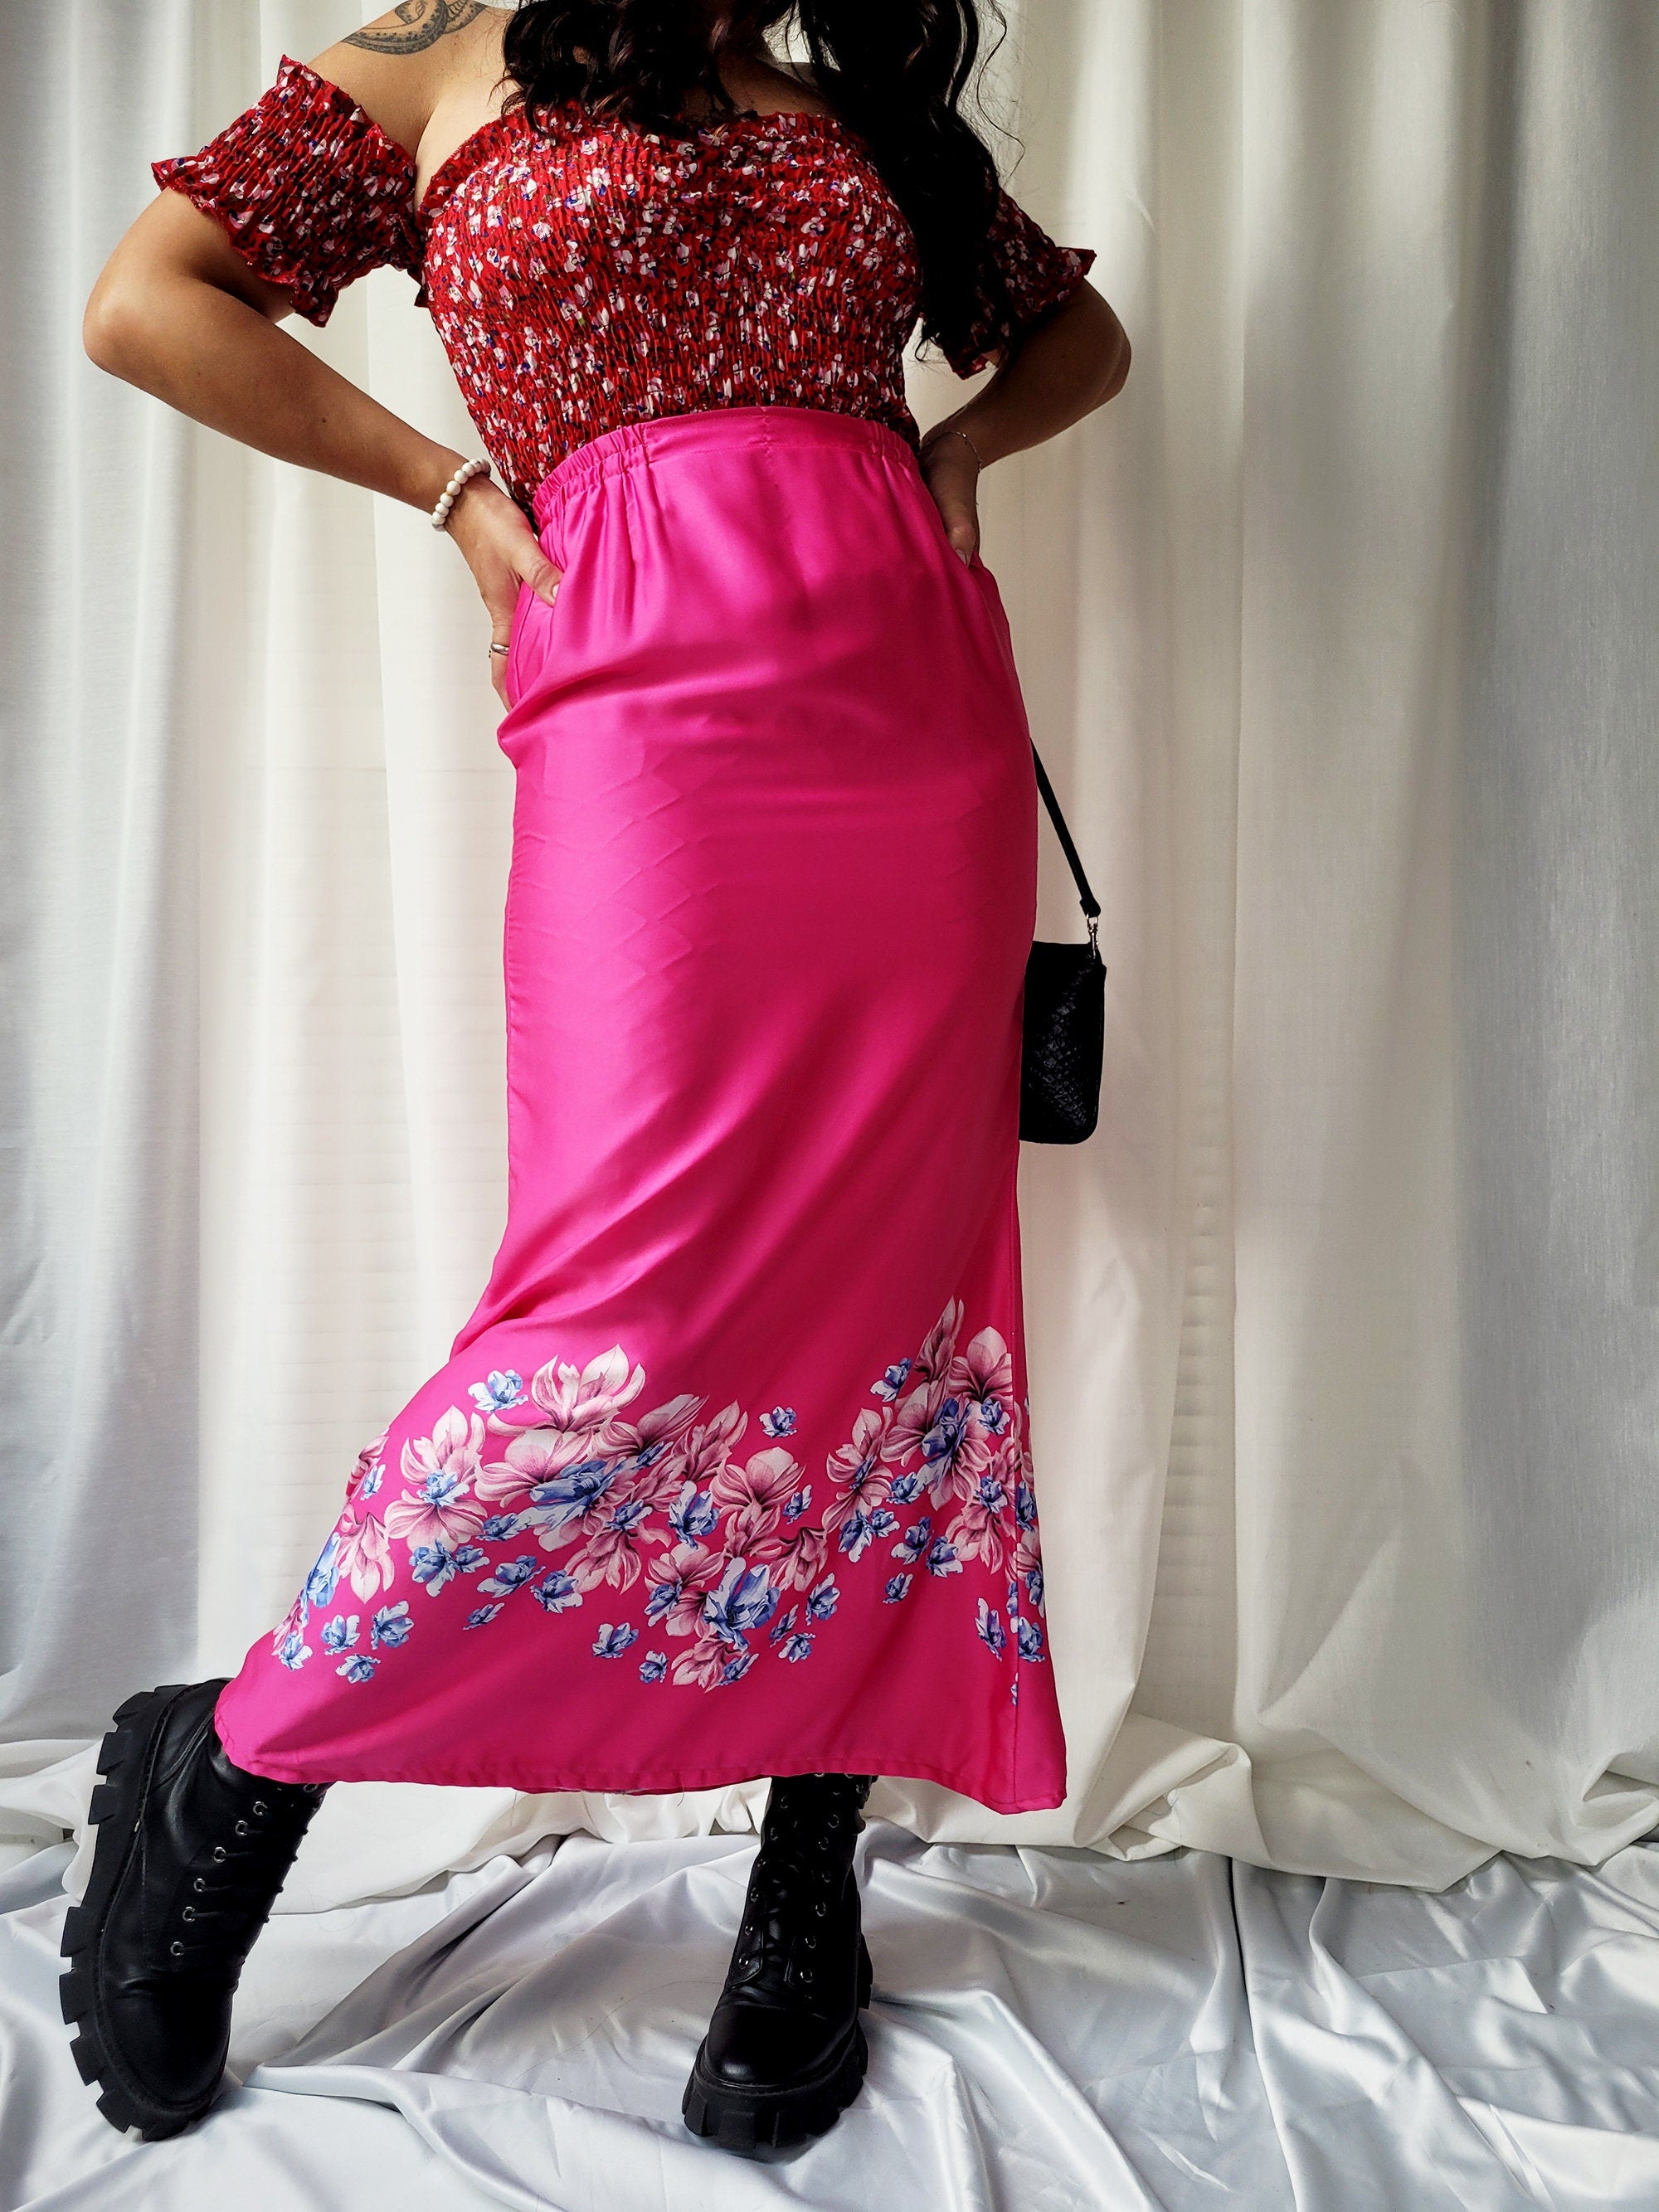 Vintage 90s pink floral handmade maxi skirt